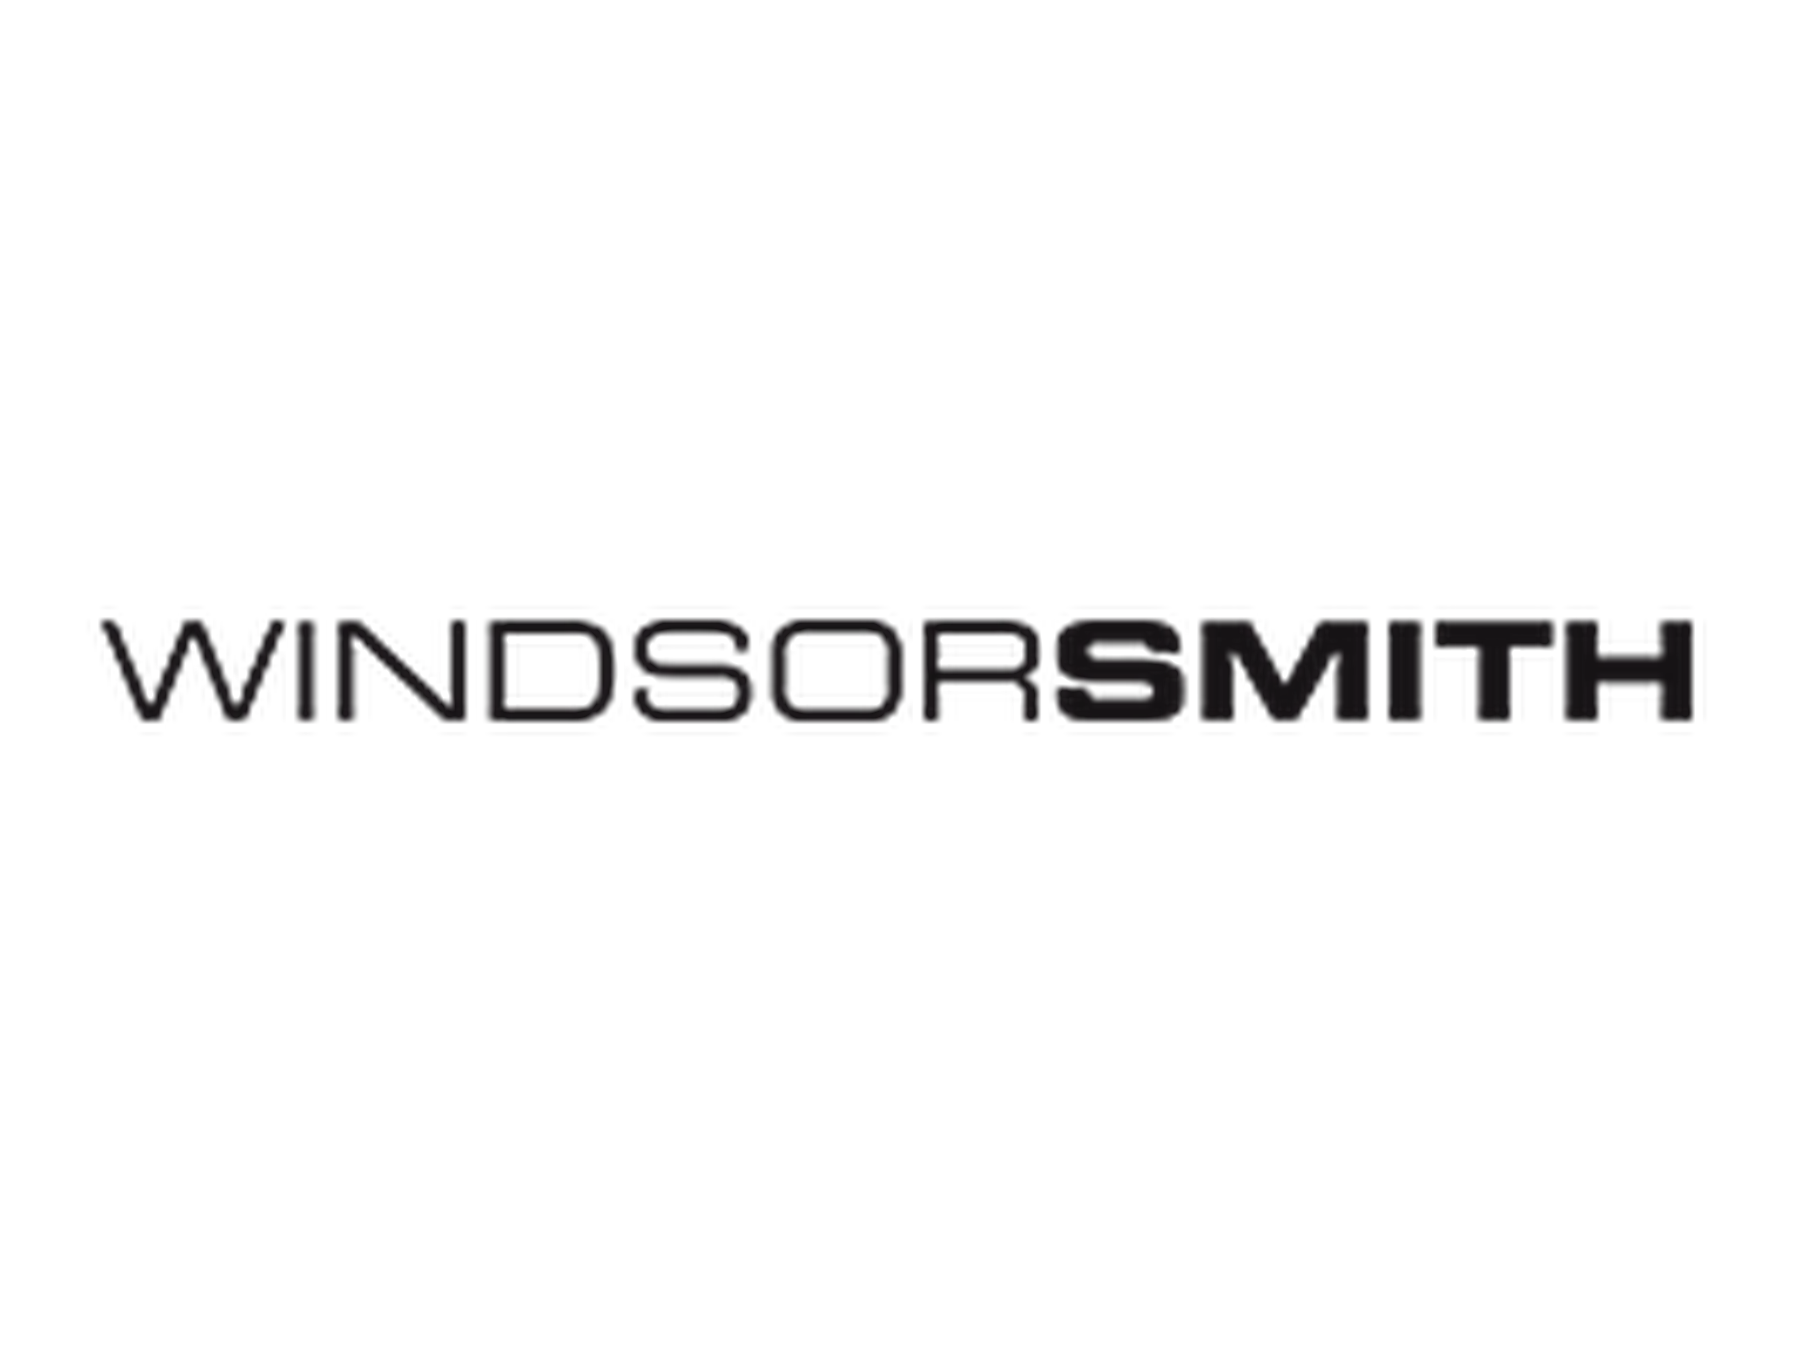 Windsor Smith Discount Code